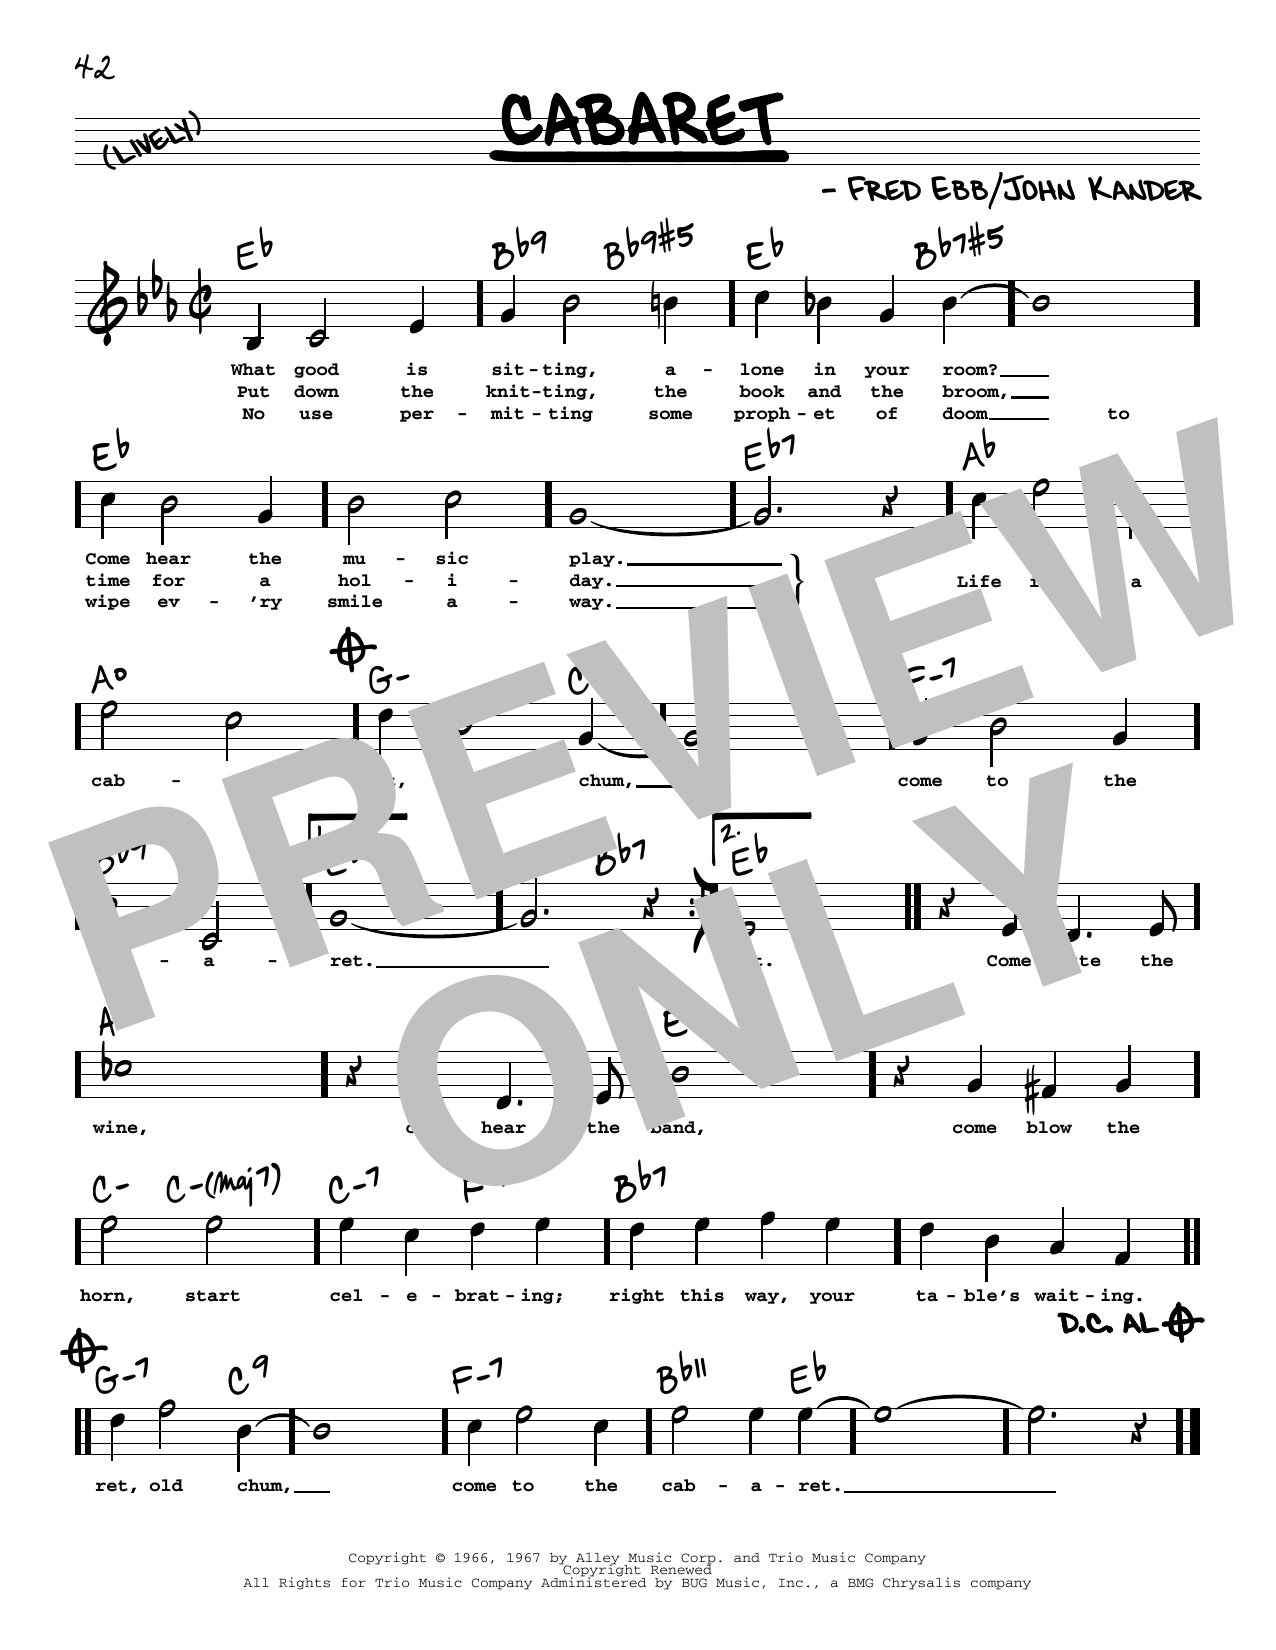 Kander & Ebb Cabaret (High Voice) Sheet Music Notes & Chords for Real Book – Melody, Lyrics & Chords - Download or Print PDF